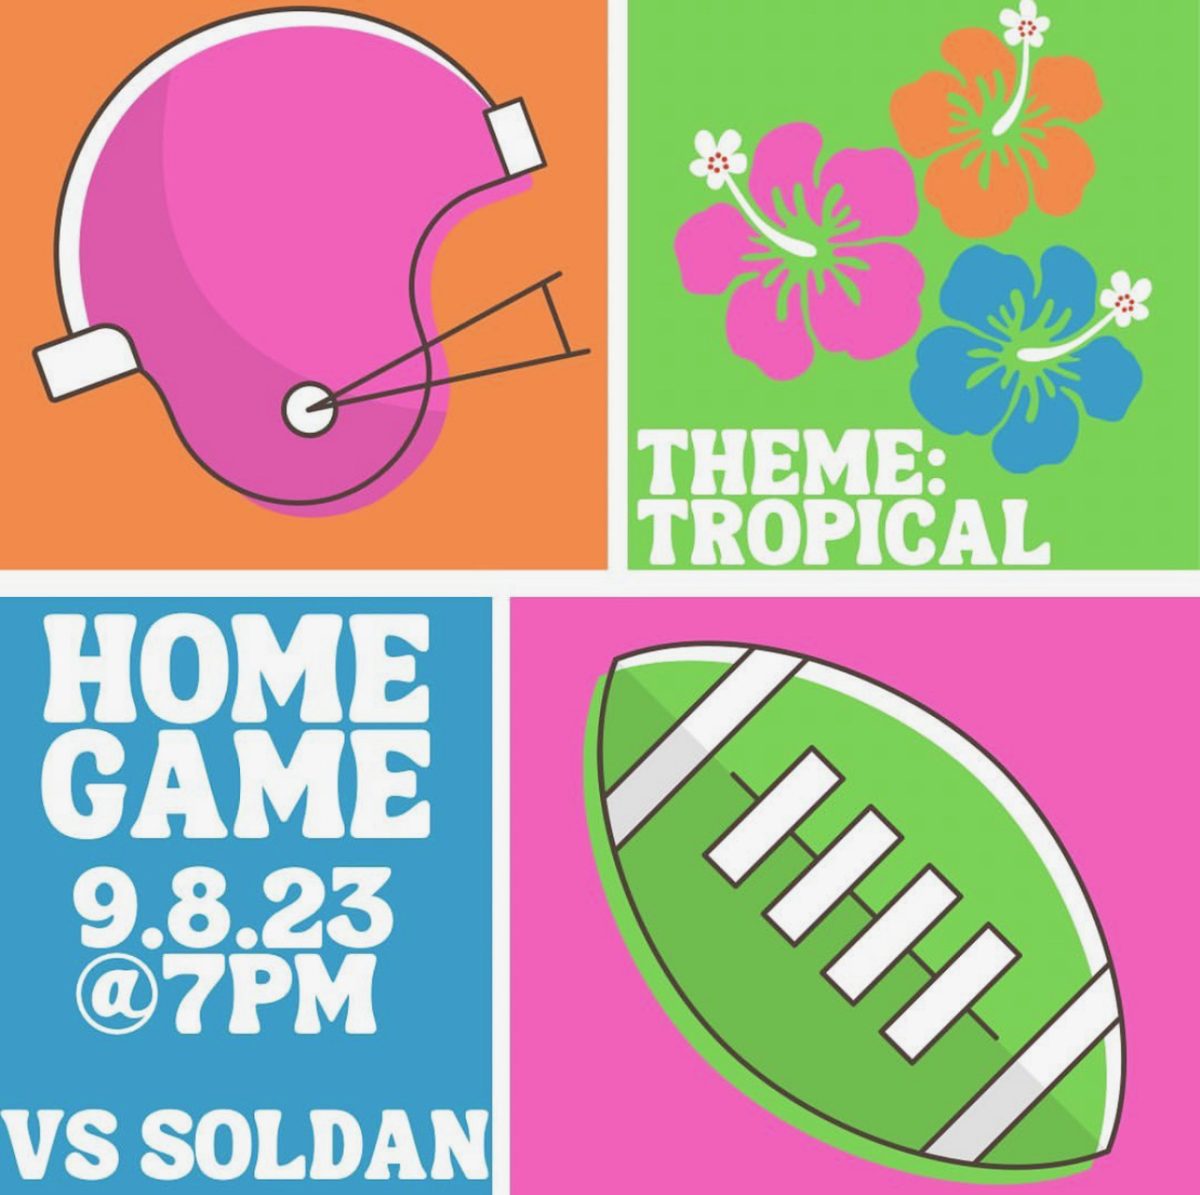 An+%40orangerush+post+on+Sept.+8+announced+a+tropical-themed+football+game.